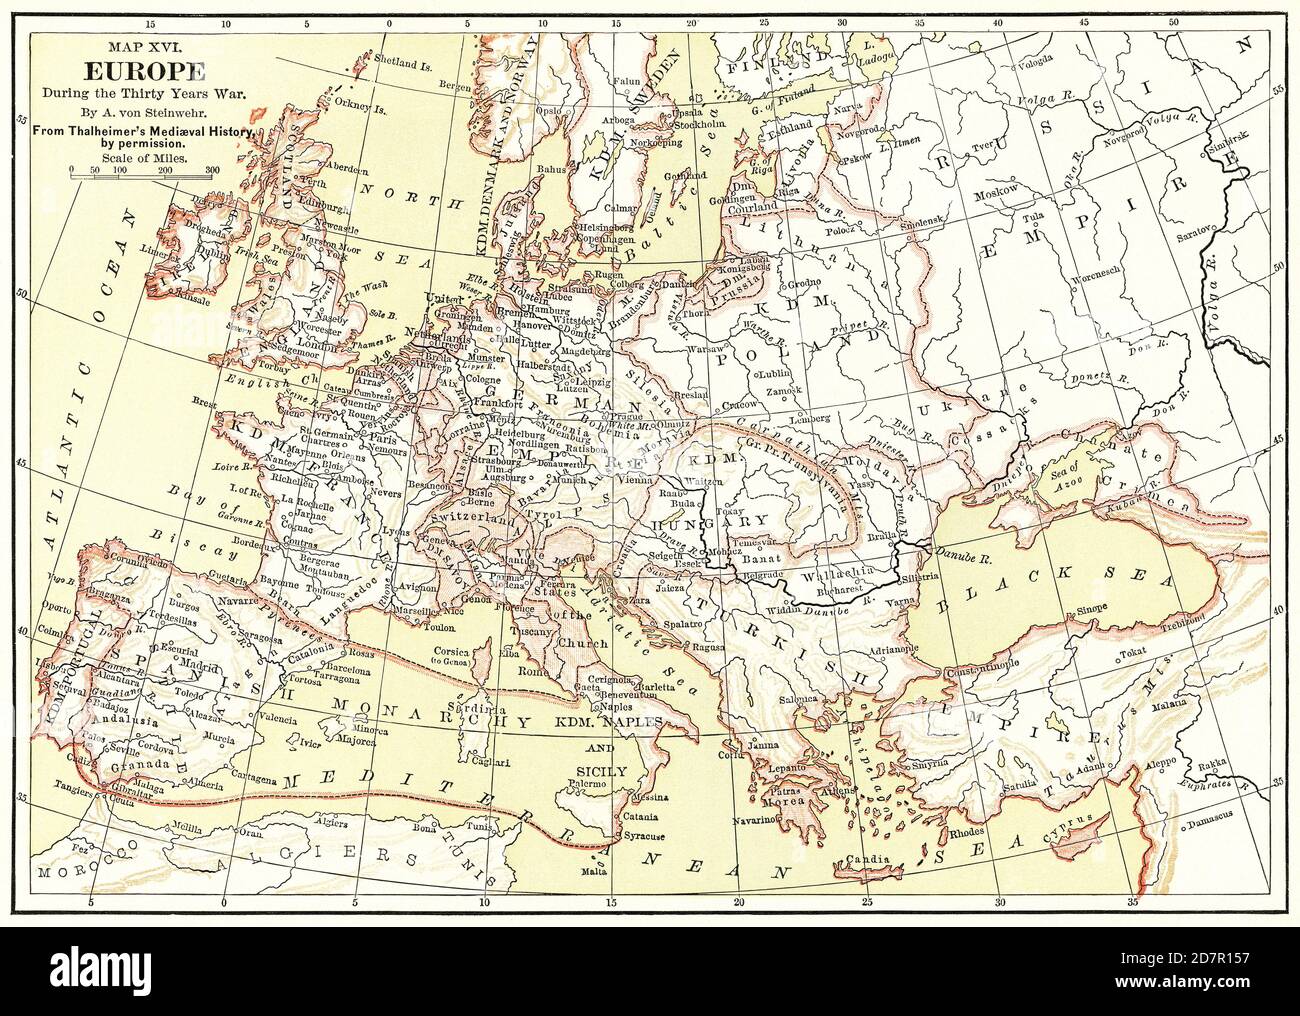 Mapa de europa medieval fotografías e imágenes de alta resolución - Alamy